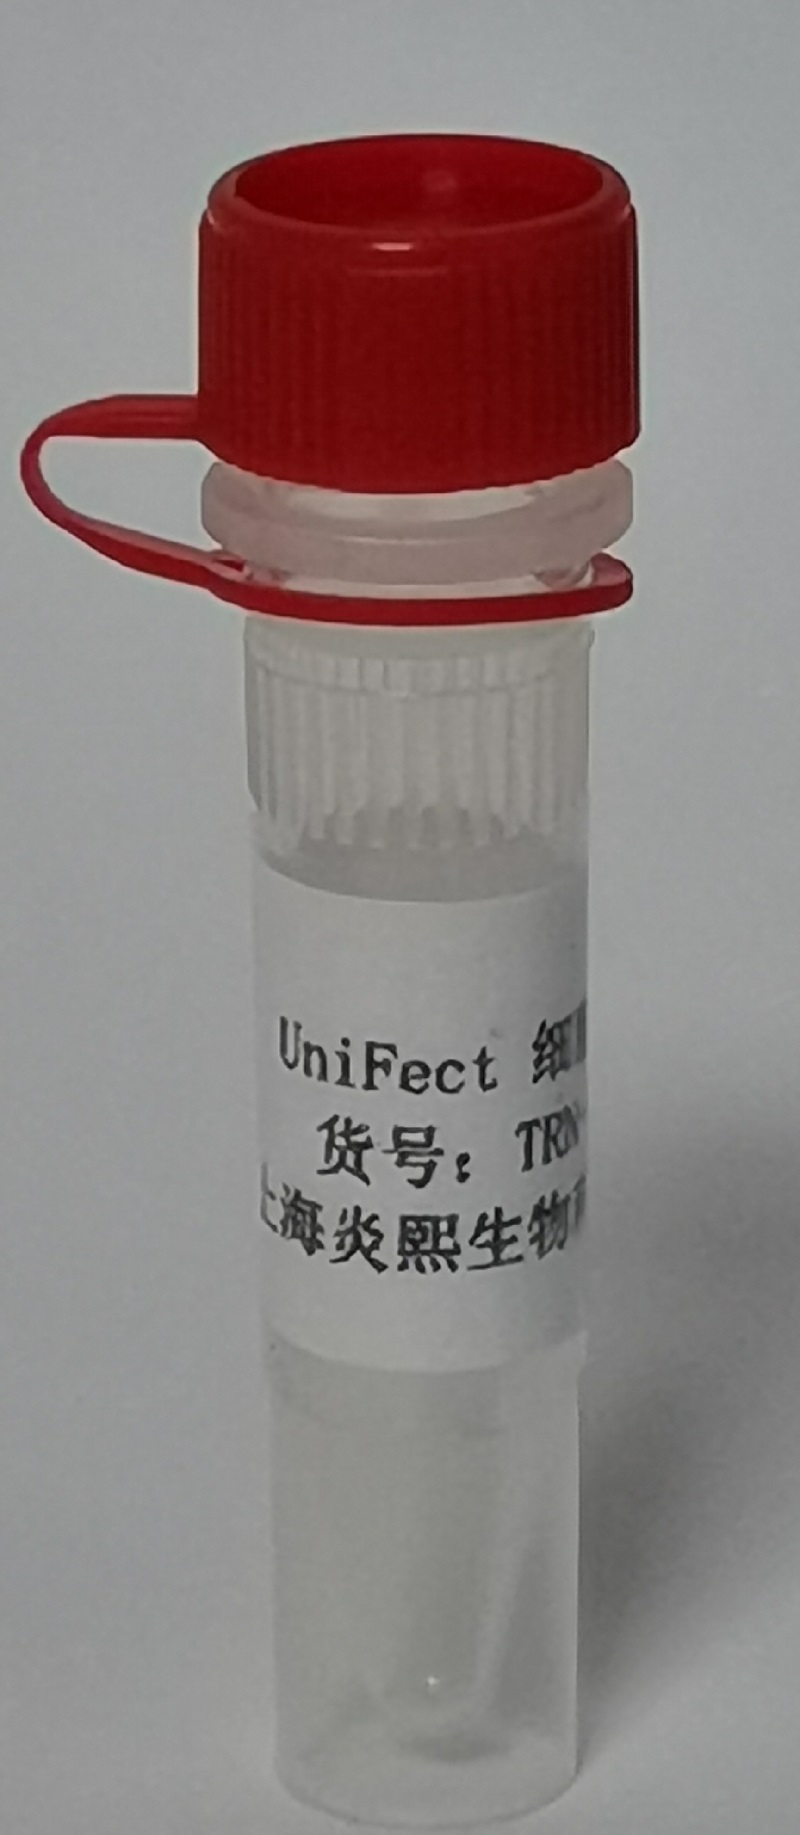 UniFect 细胞转染试剂